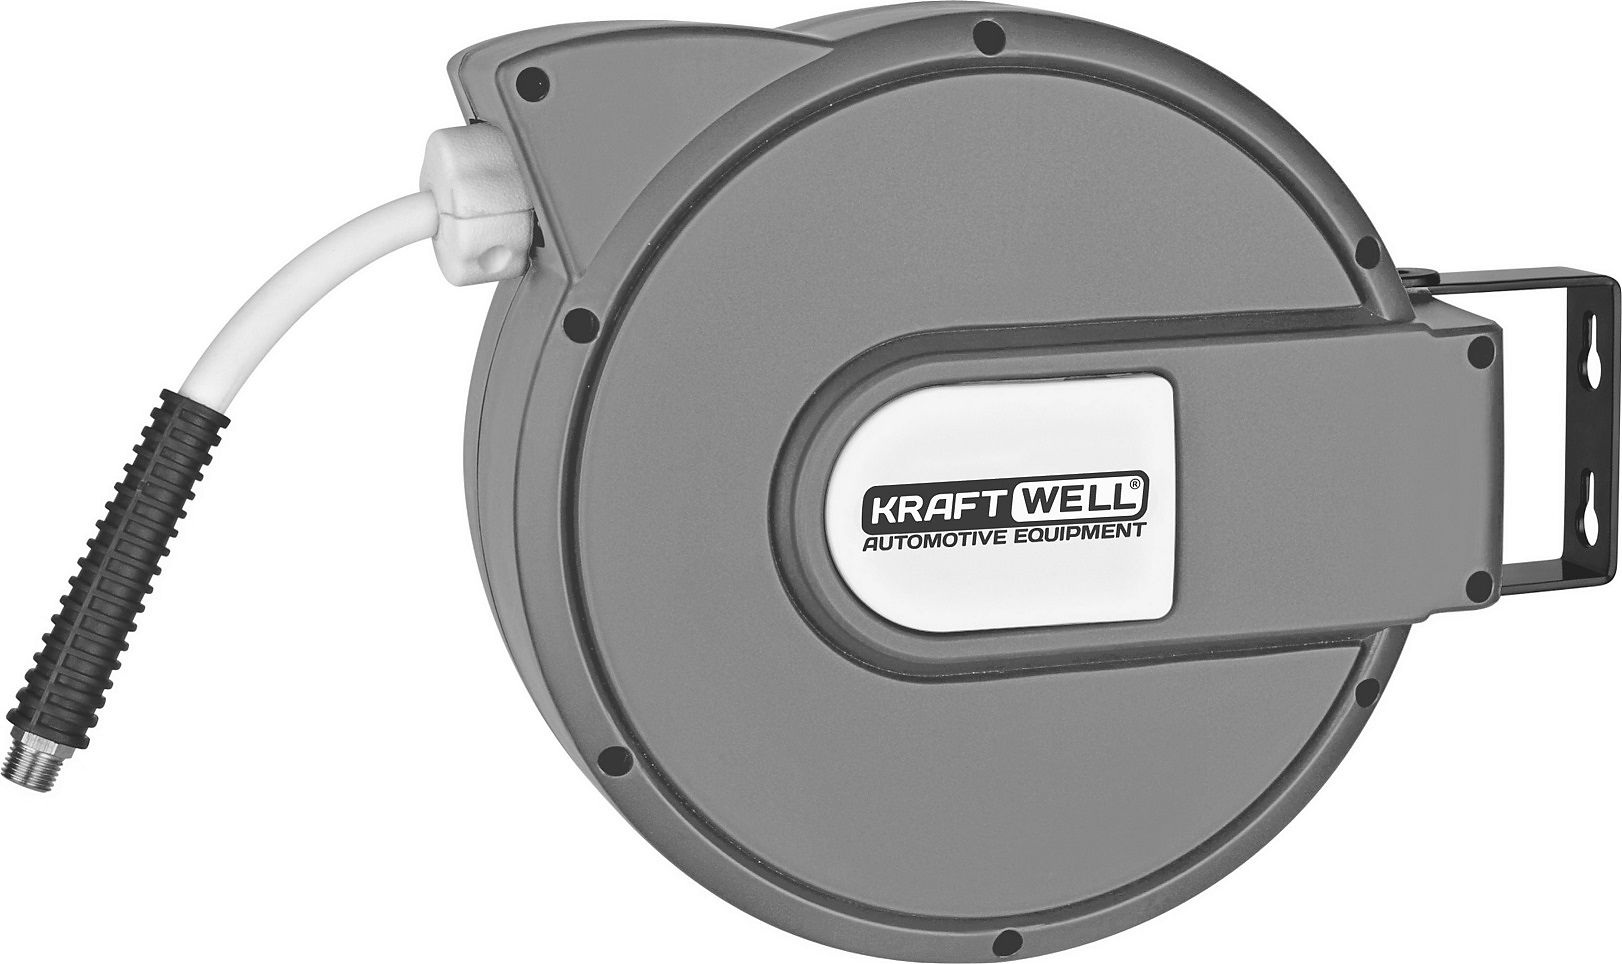 KRW1731.C6 Катушка для раздачи воздуха/воды, закрытая пластиковая KraftWell